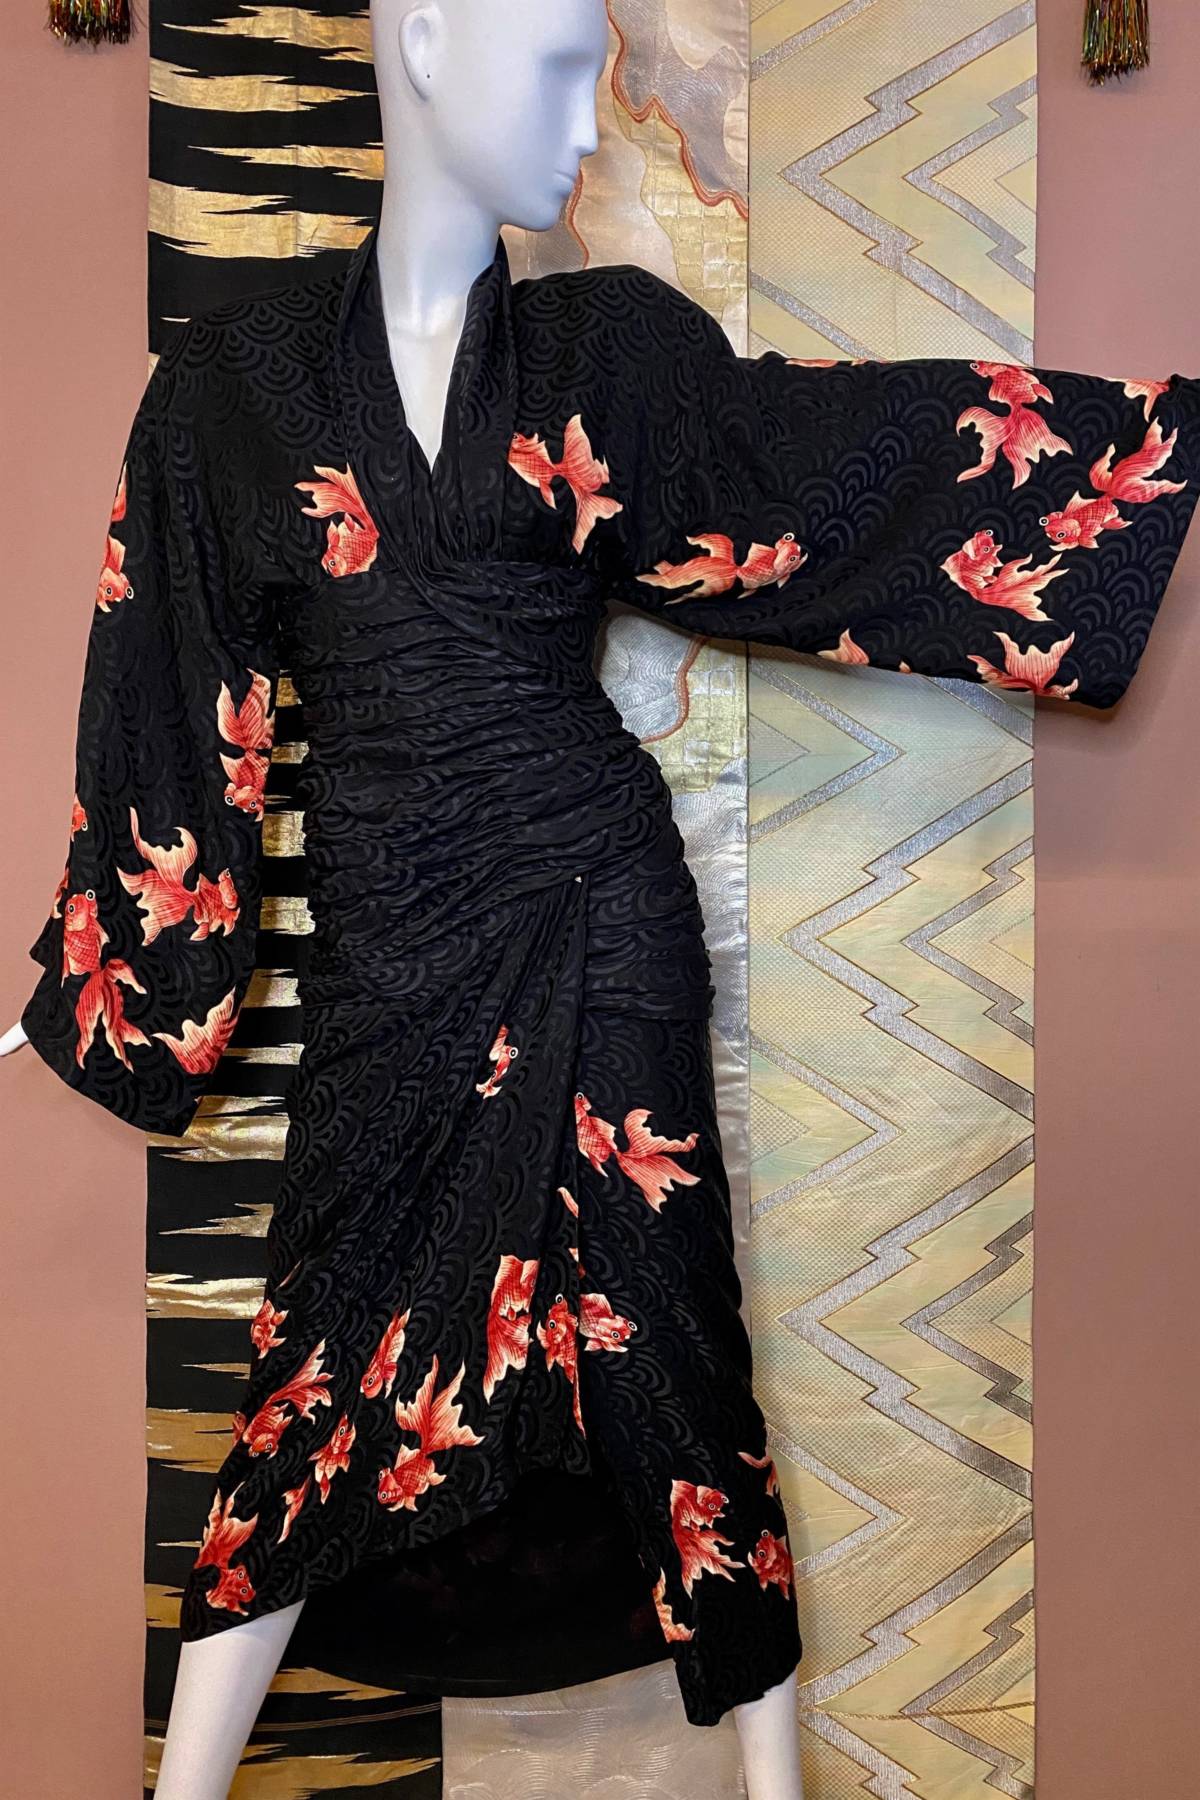 Vintage dress on mannequin in front of silk backdrop